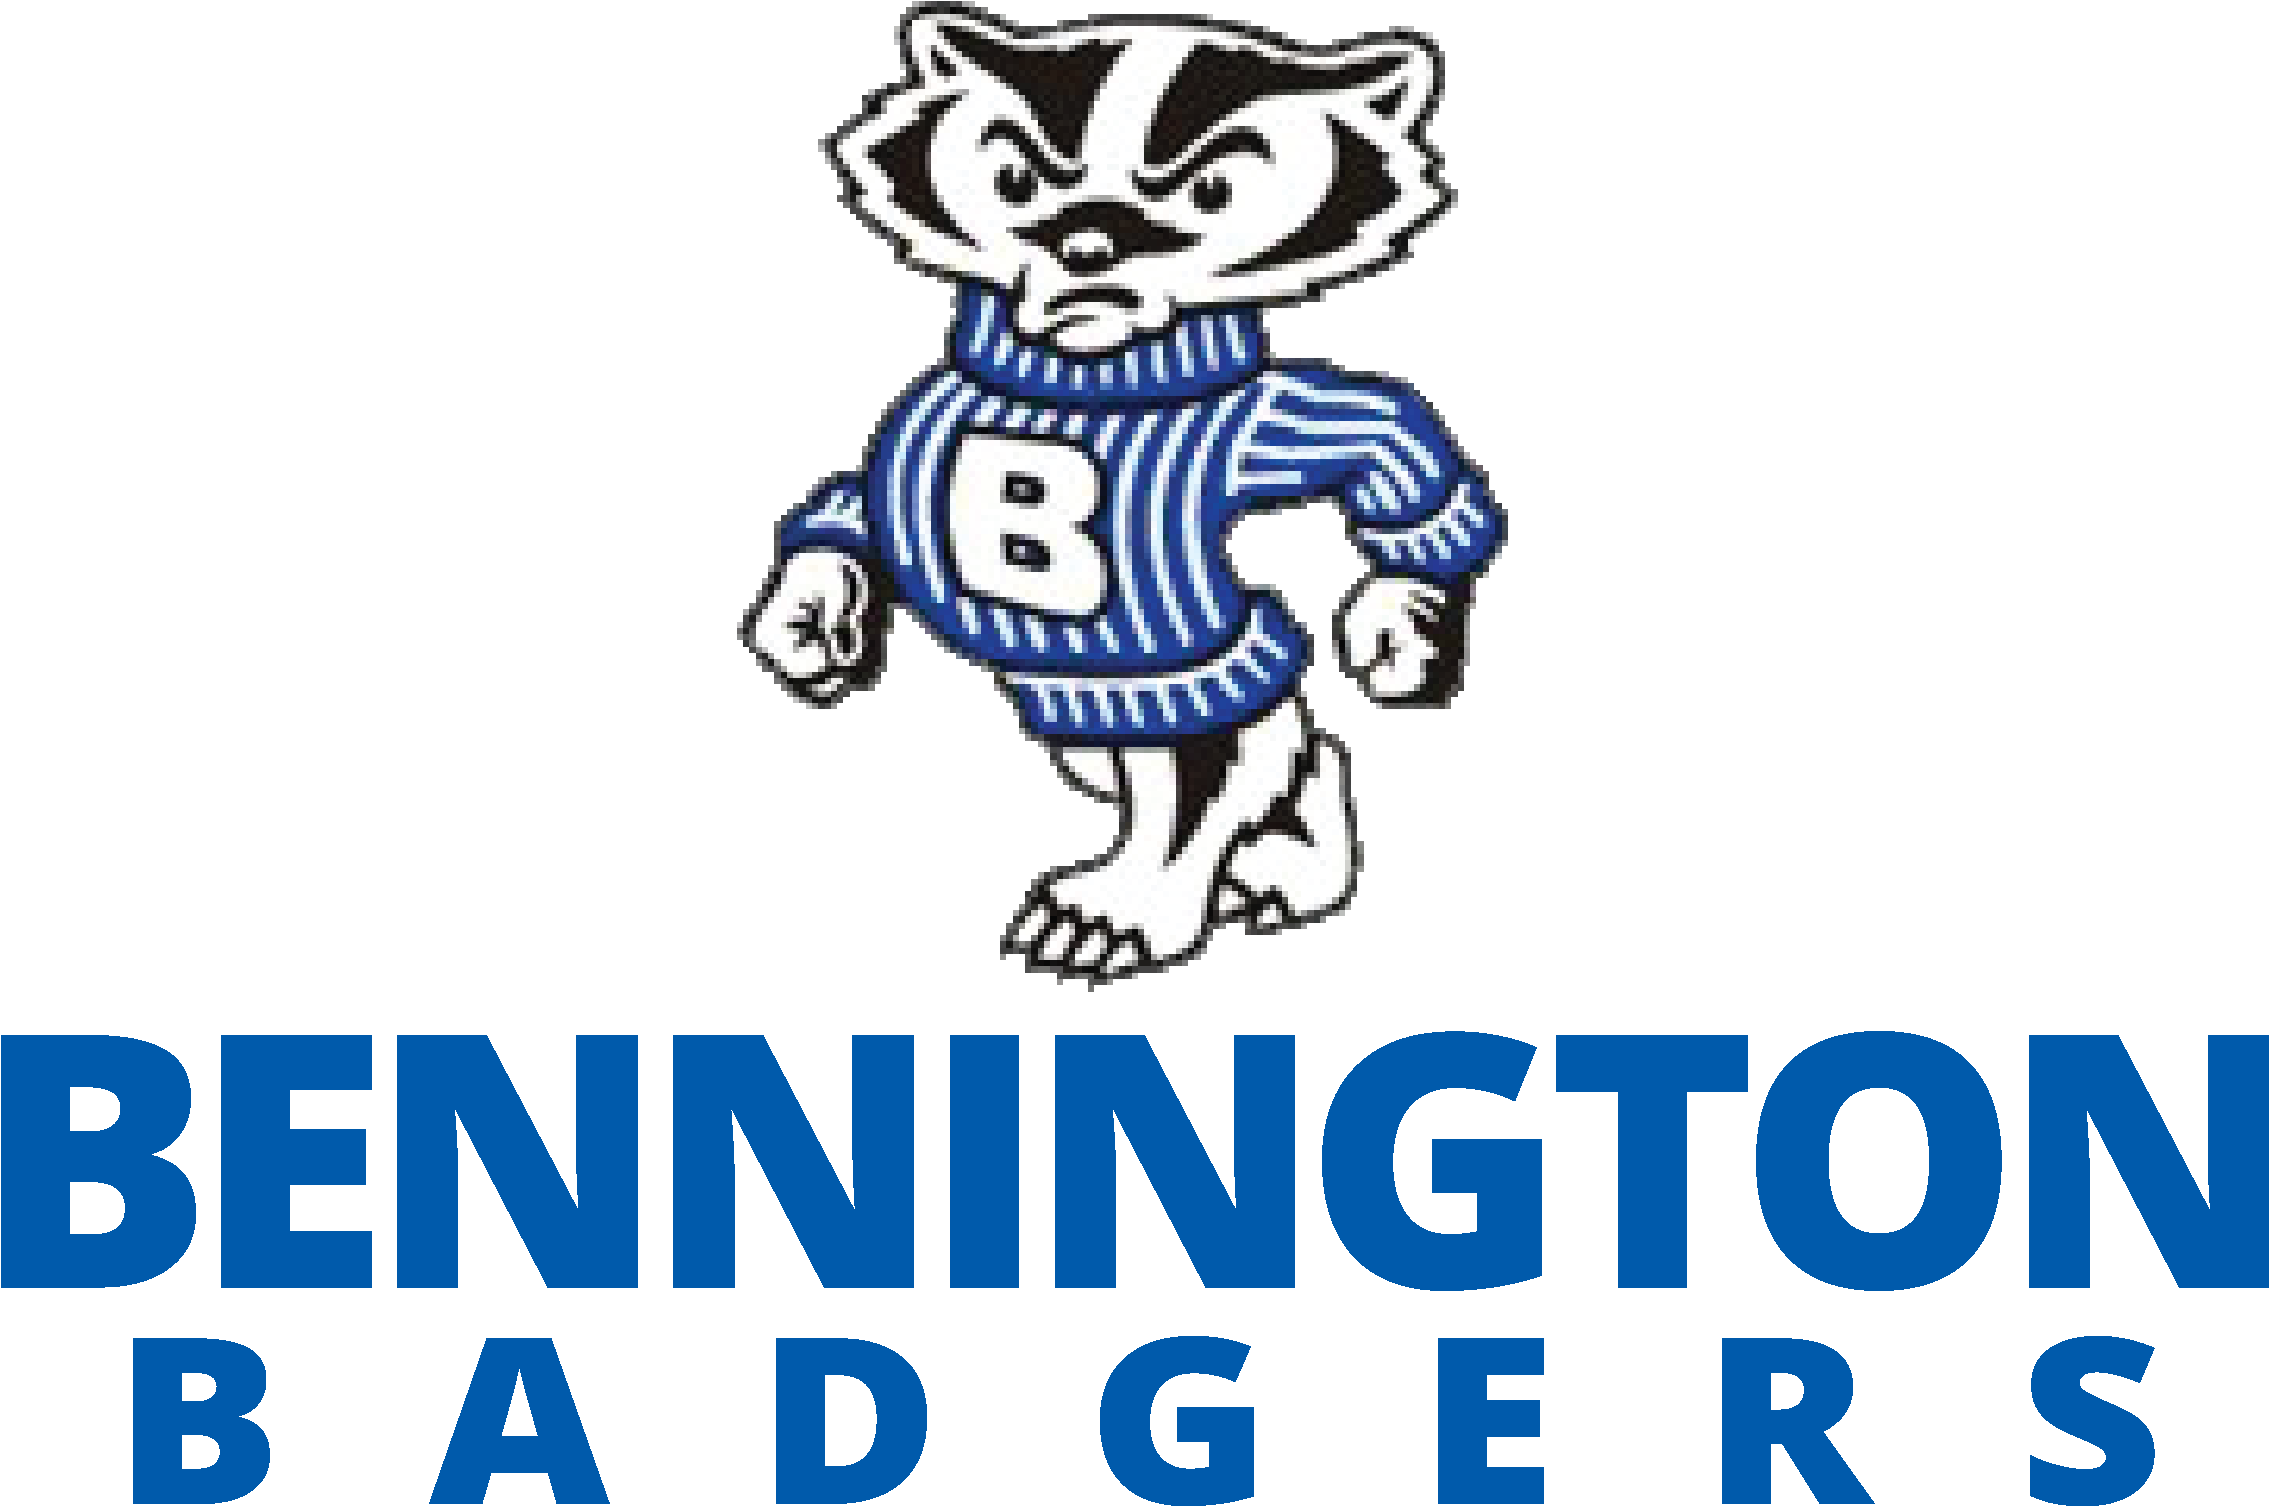 Bennington Badgers (2268x1531)